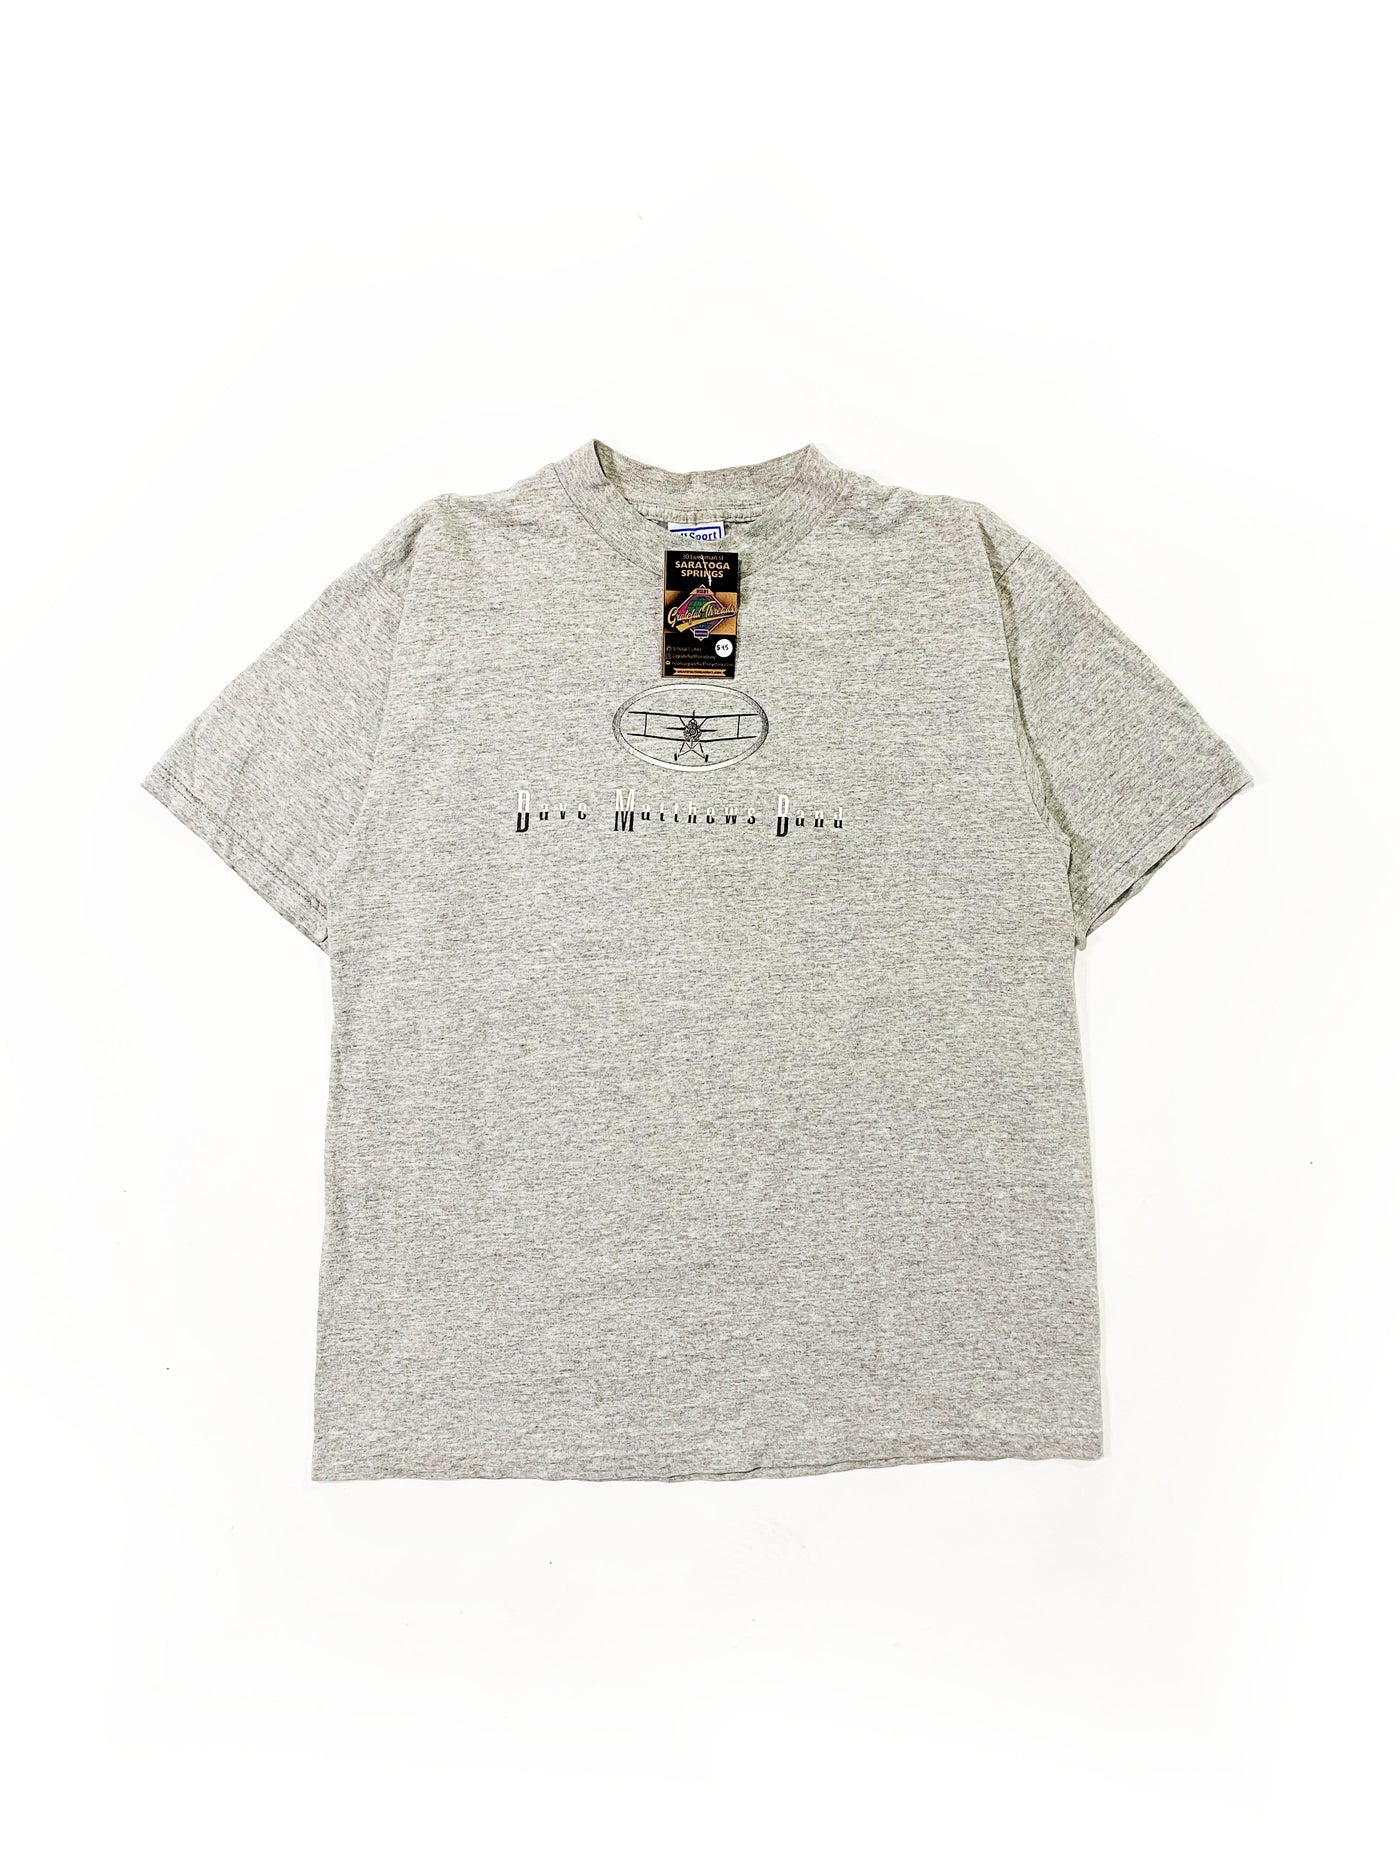 Vintage 1998 Dave Matthews Band Fall Tour T-Shirt